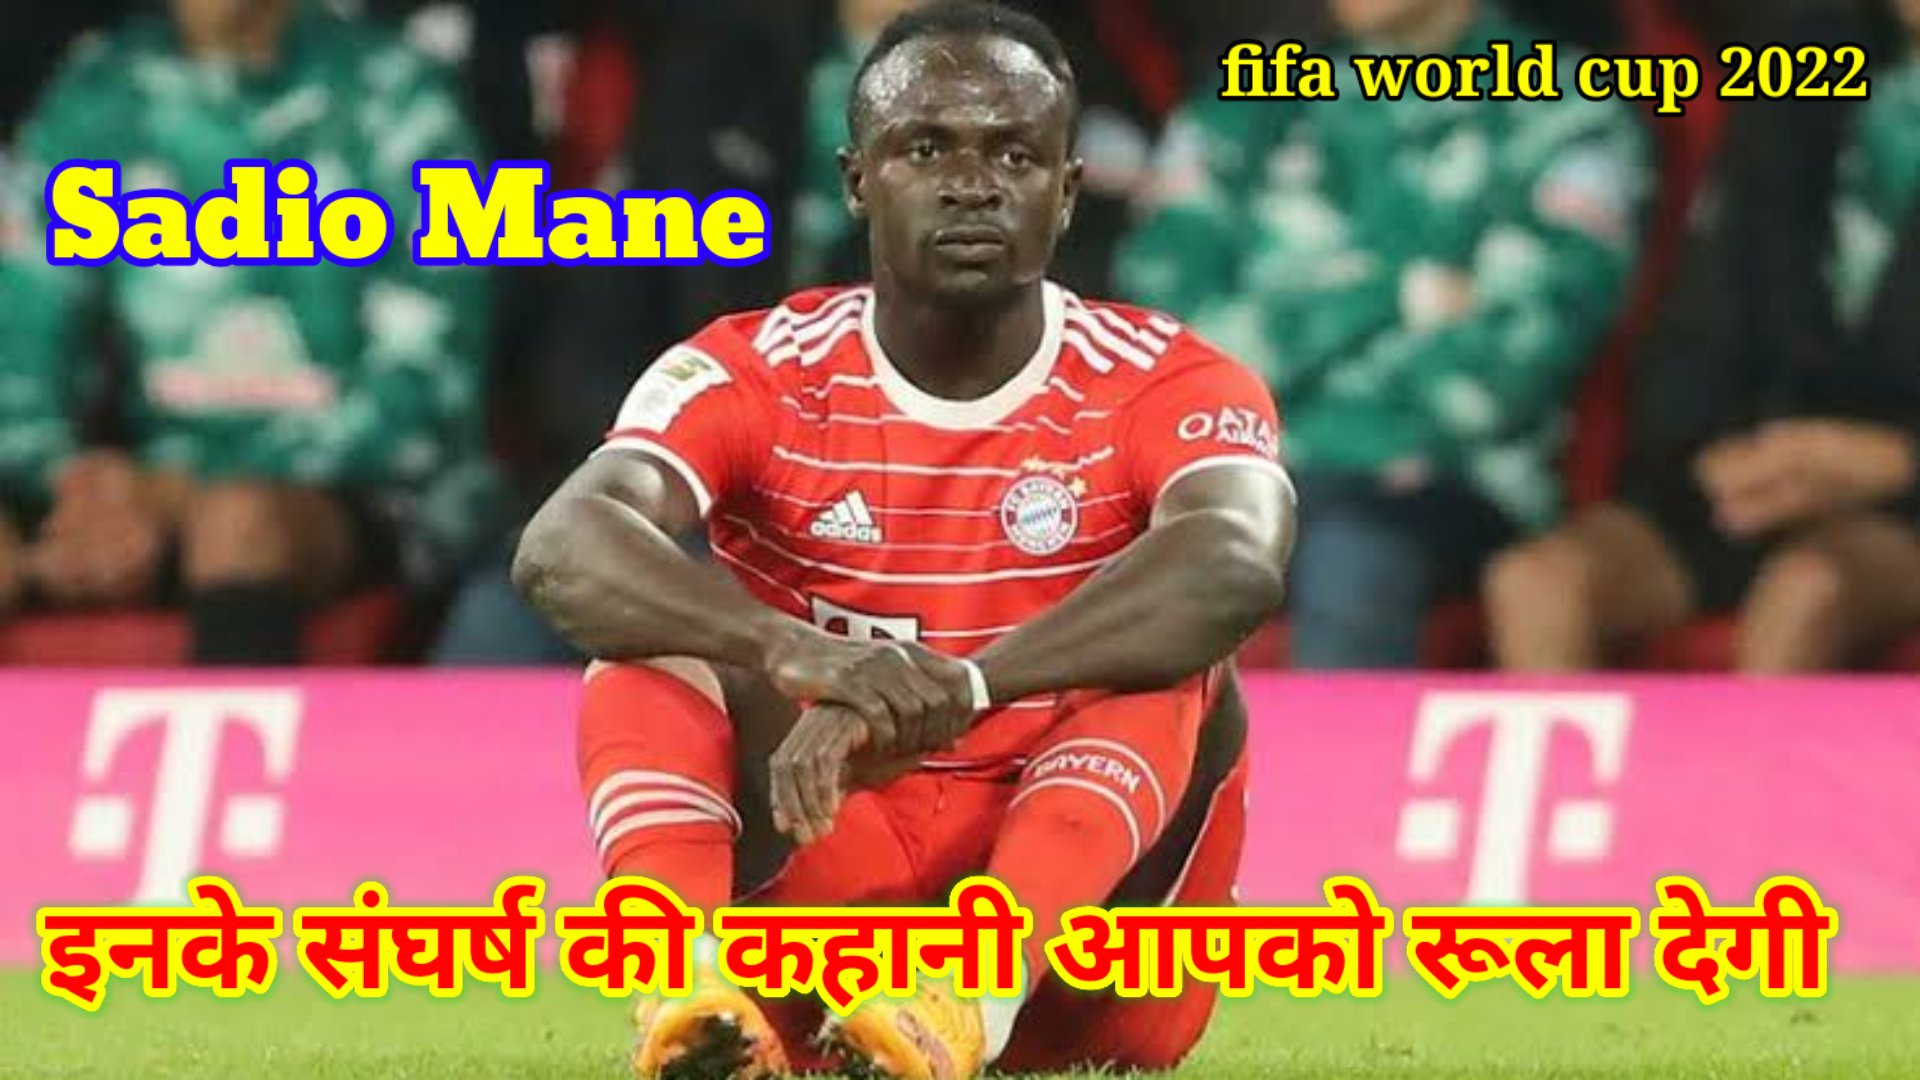 Sadio mane story in Hindi (fifa world cup 2022)